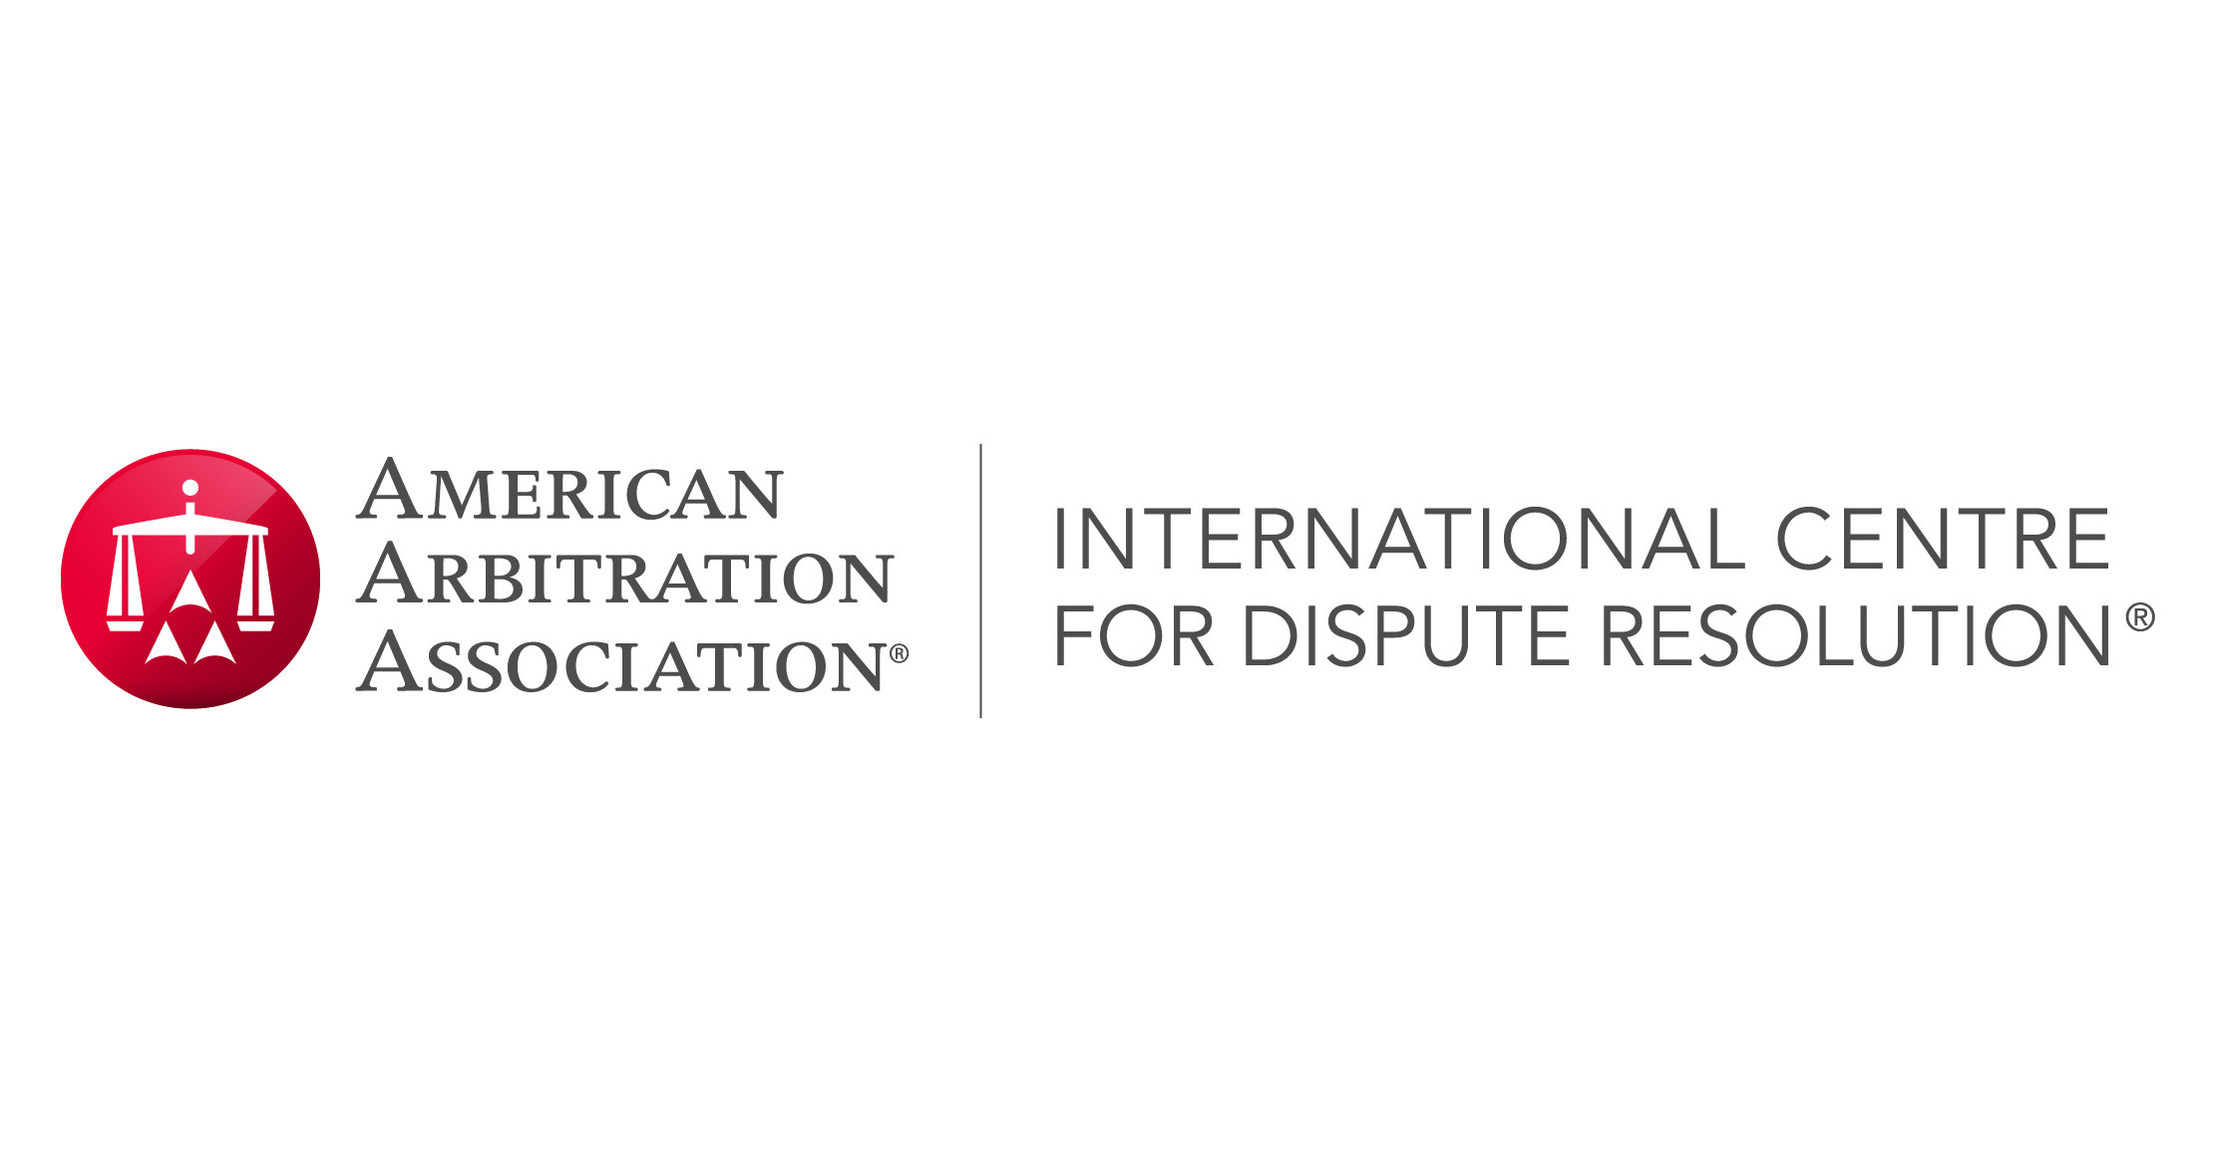 American Arbitration Association – International Centre for Dispute Resolution